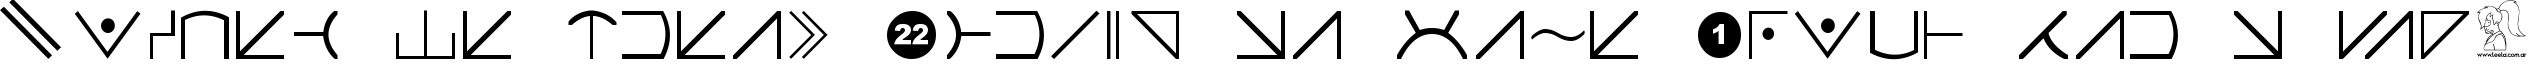 Пример написания шрифтом Futurama Alien Alphabet Two текста на французском